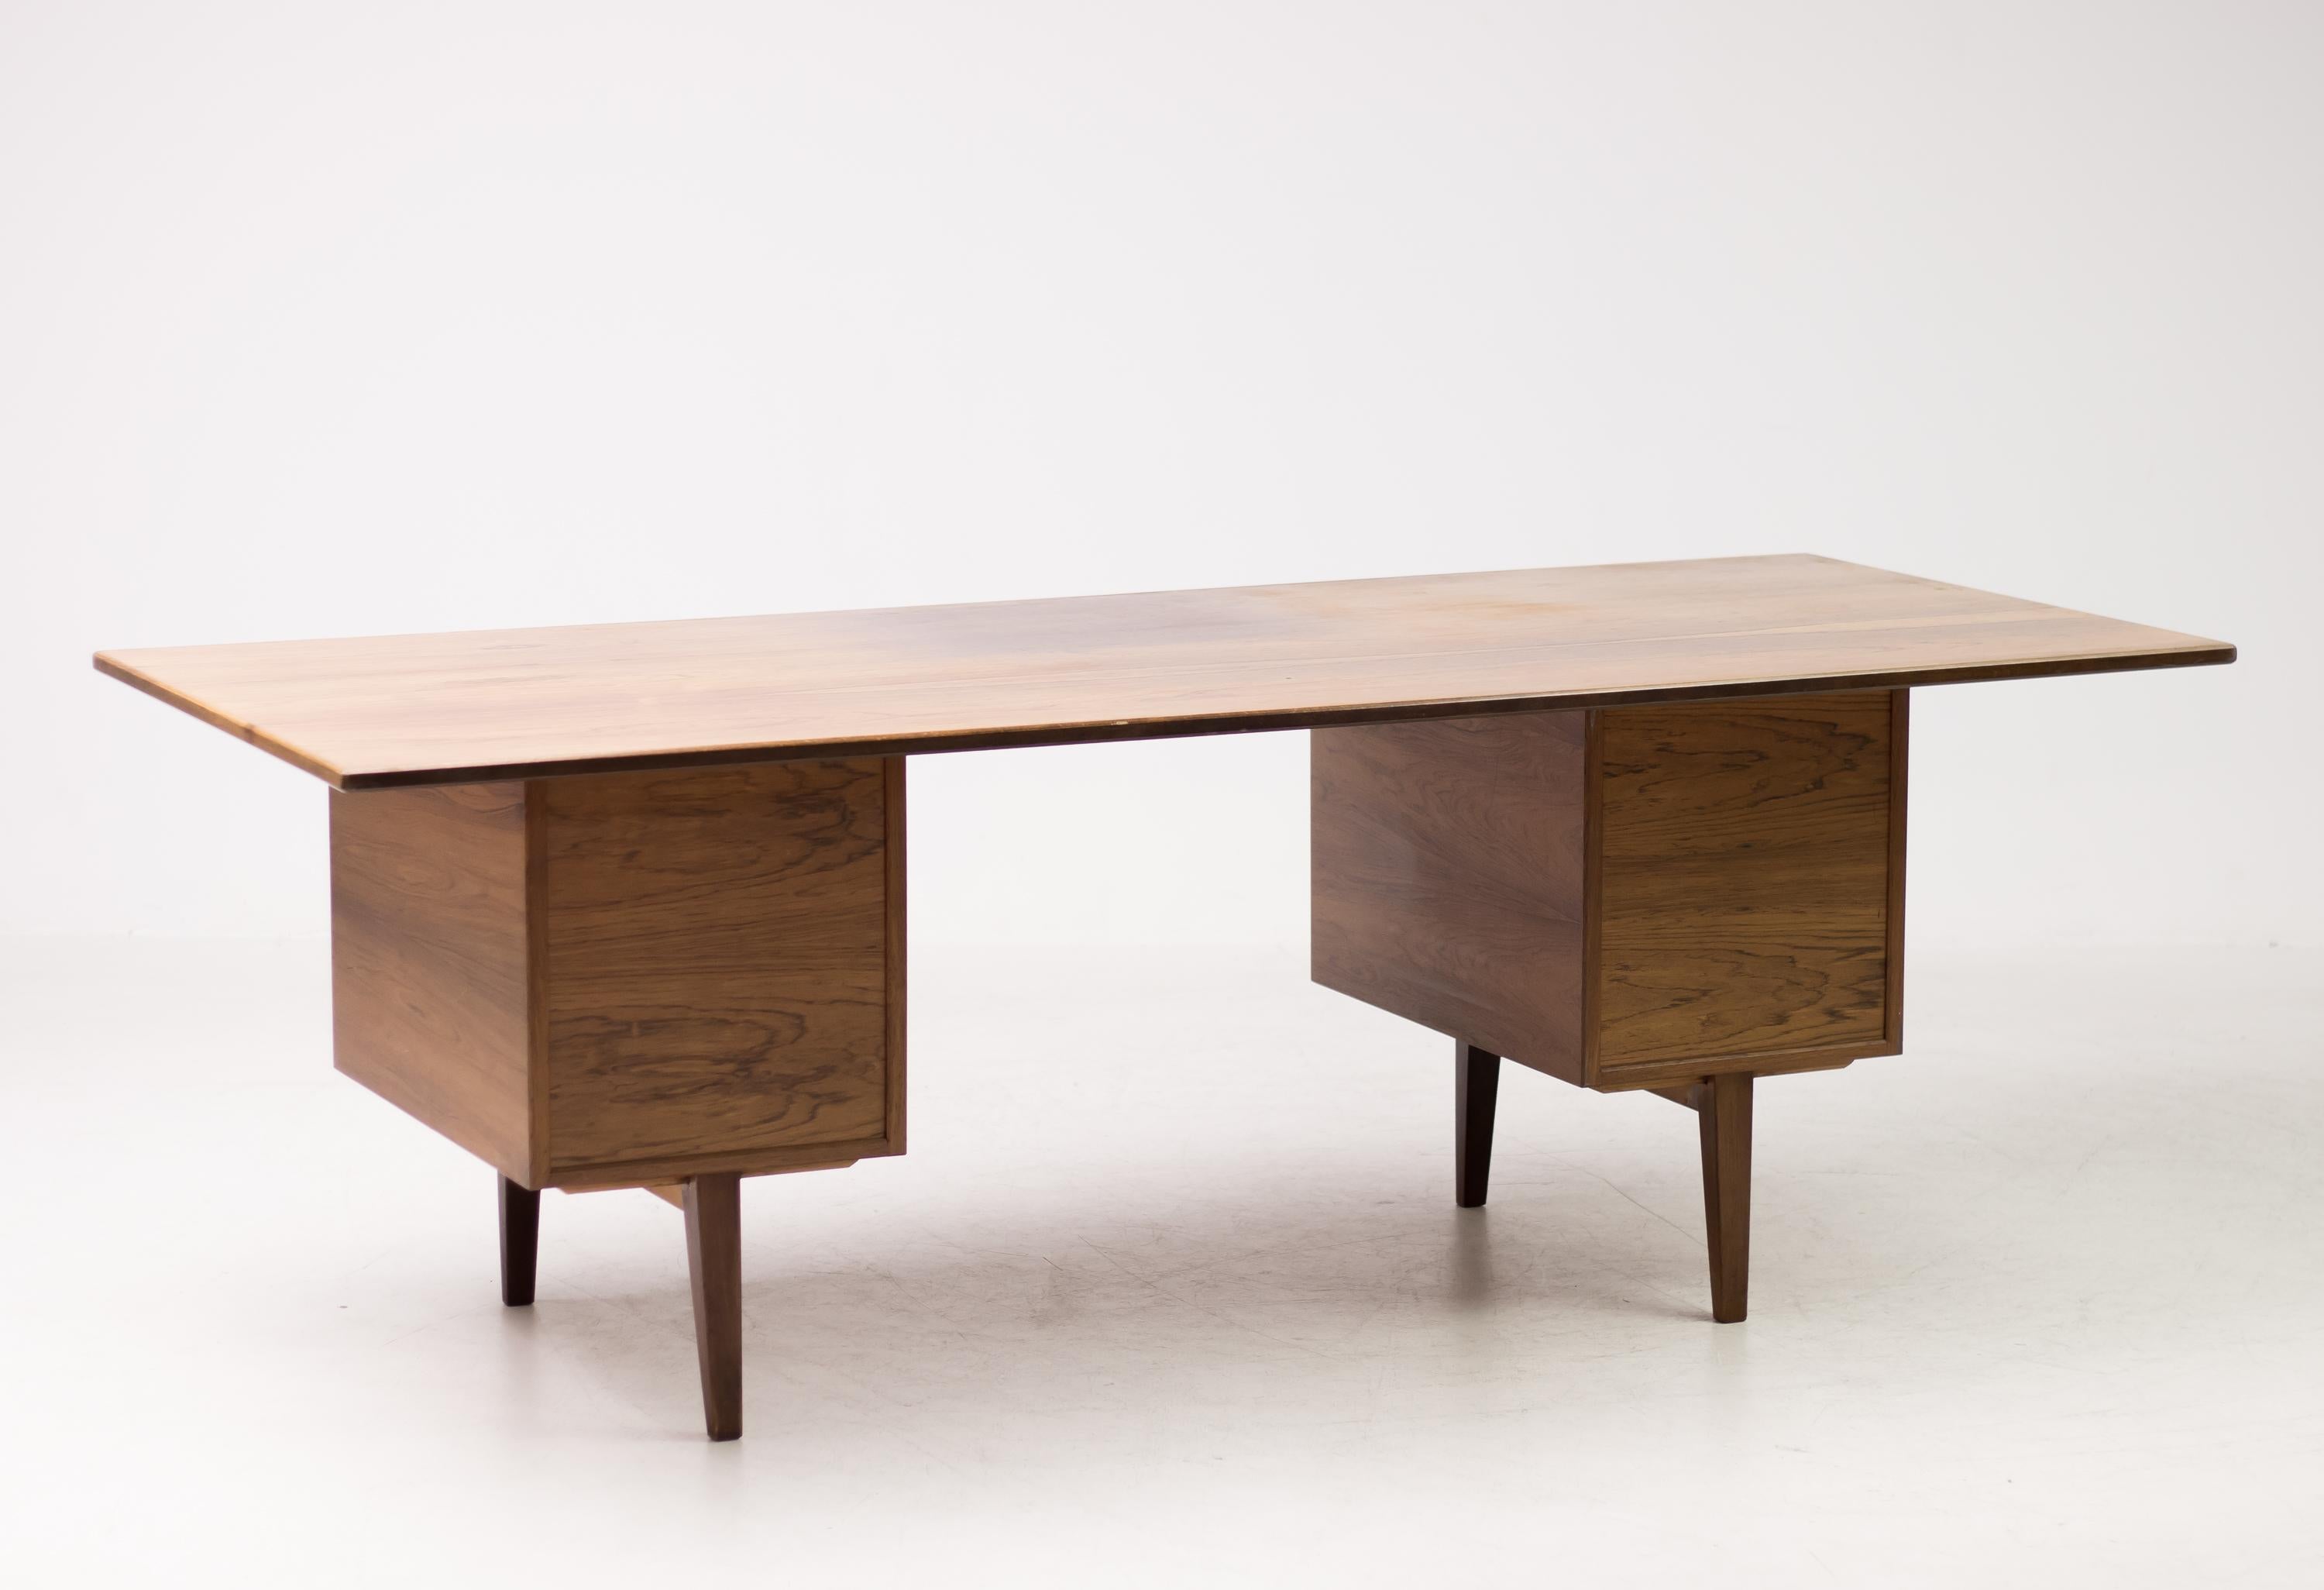 Beautiful 1960s Brazilian rosewood (Riopalisander) desk, made in Denmark.
Complete with CITES certificate.